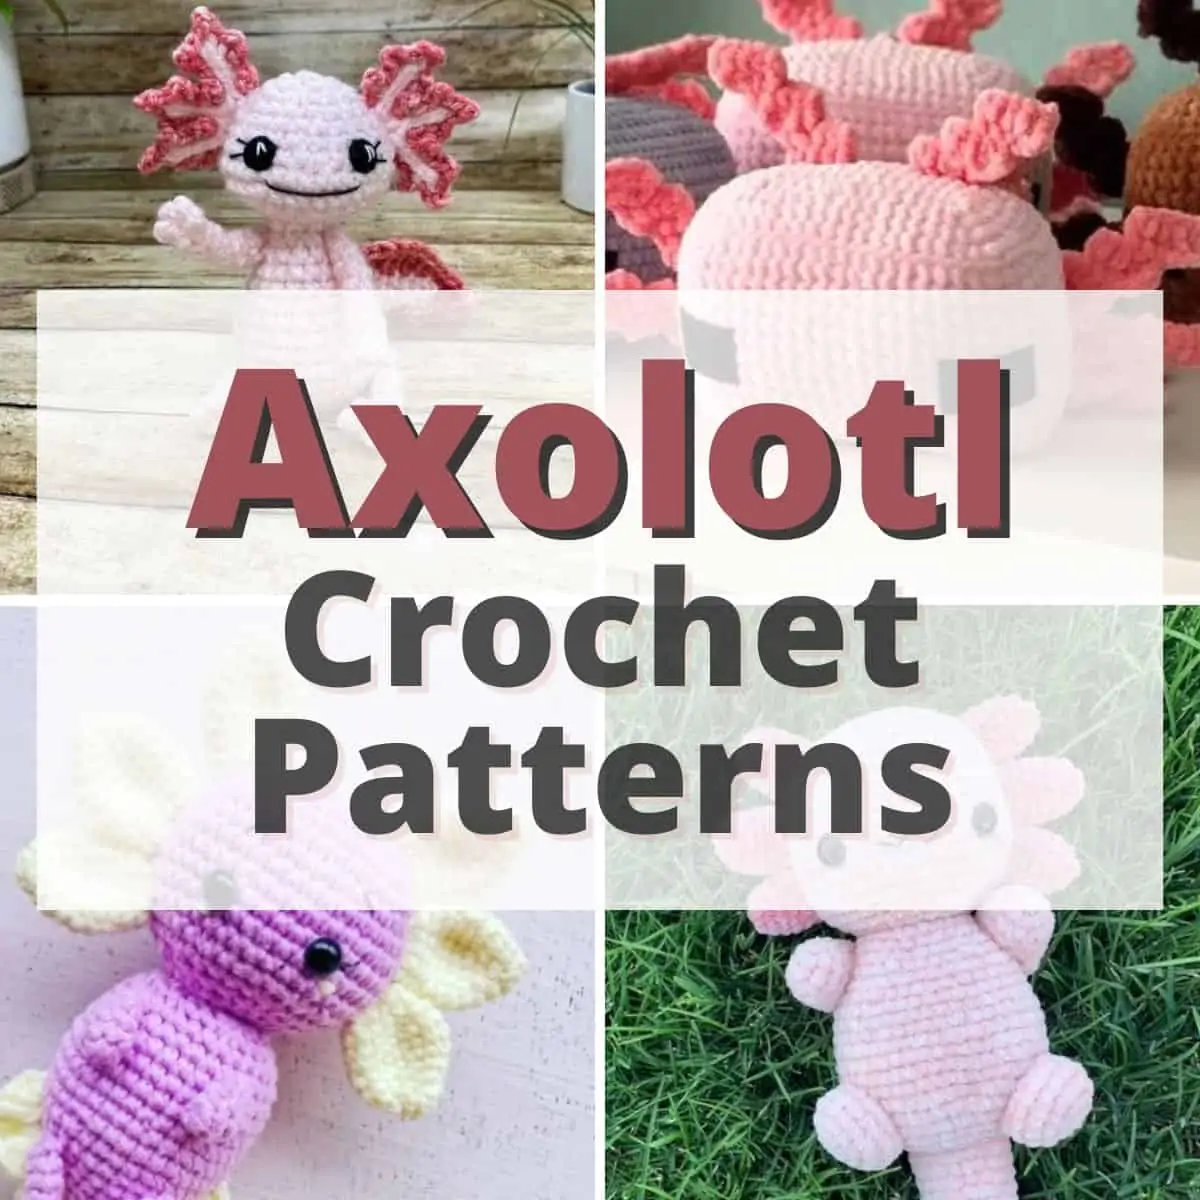 Squishy Axolotl Amigurumi Crochet pattern by Hookfully